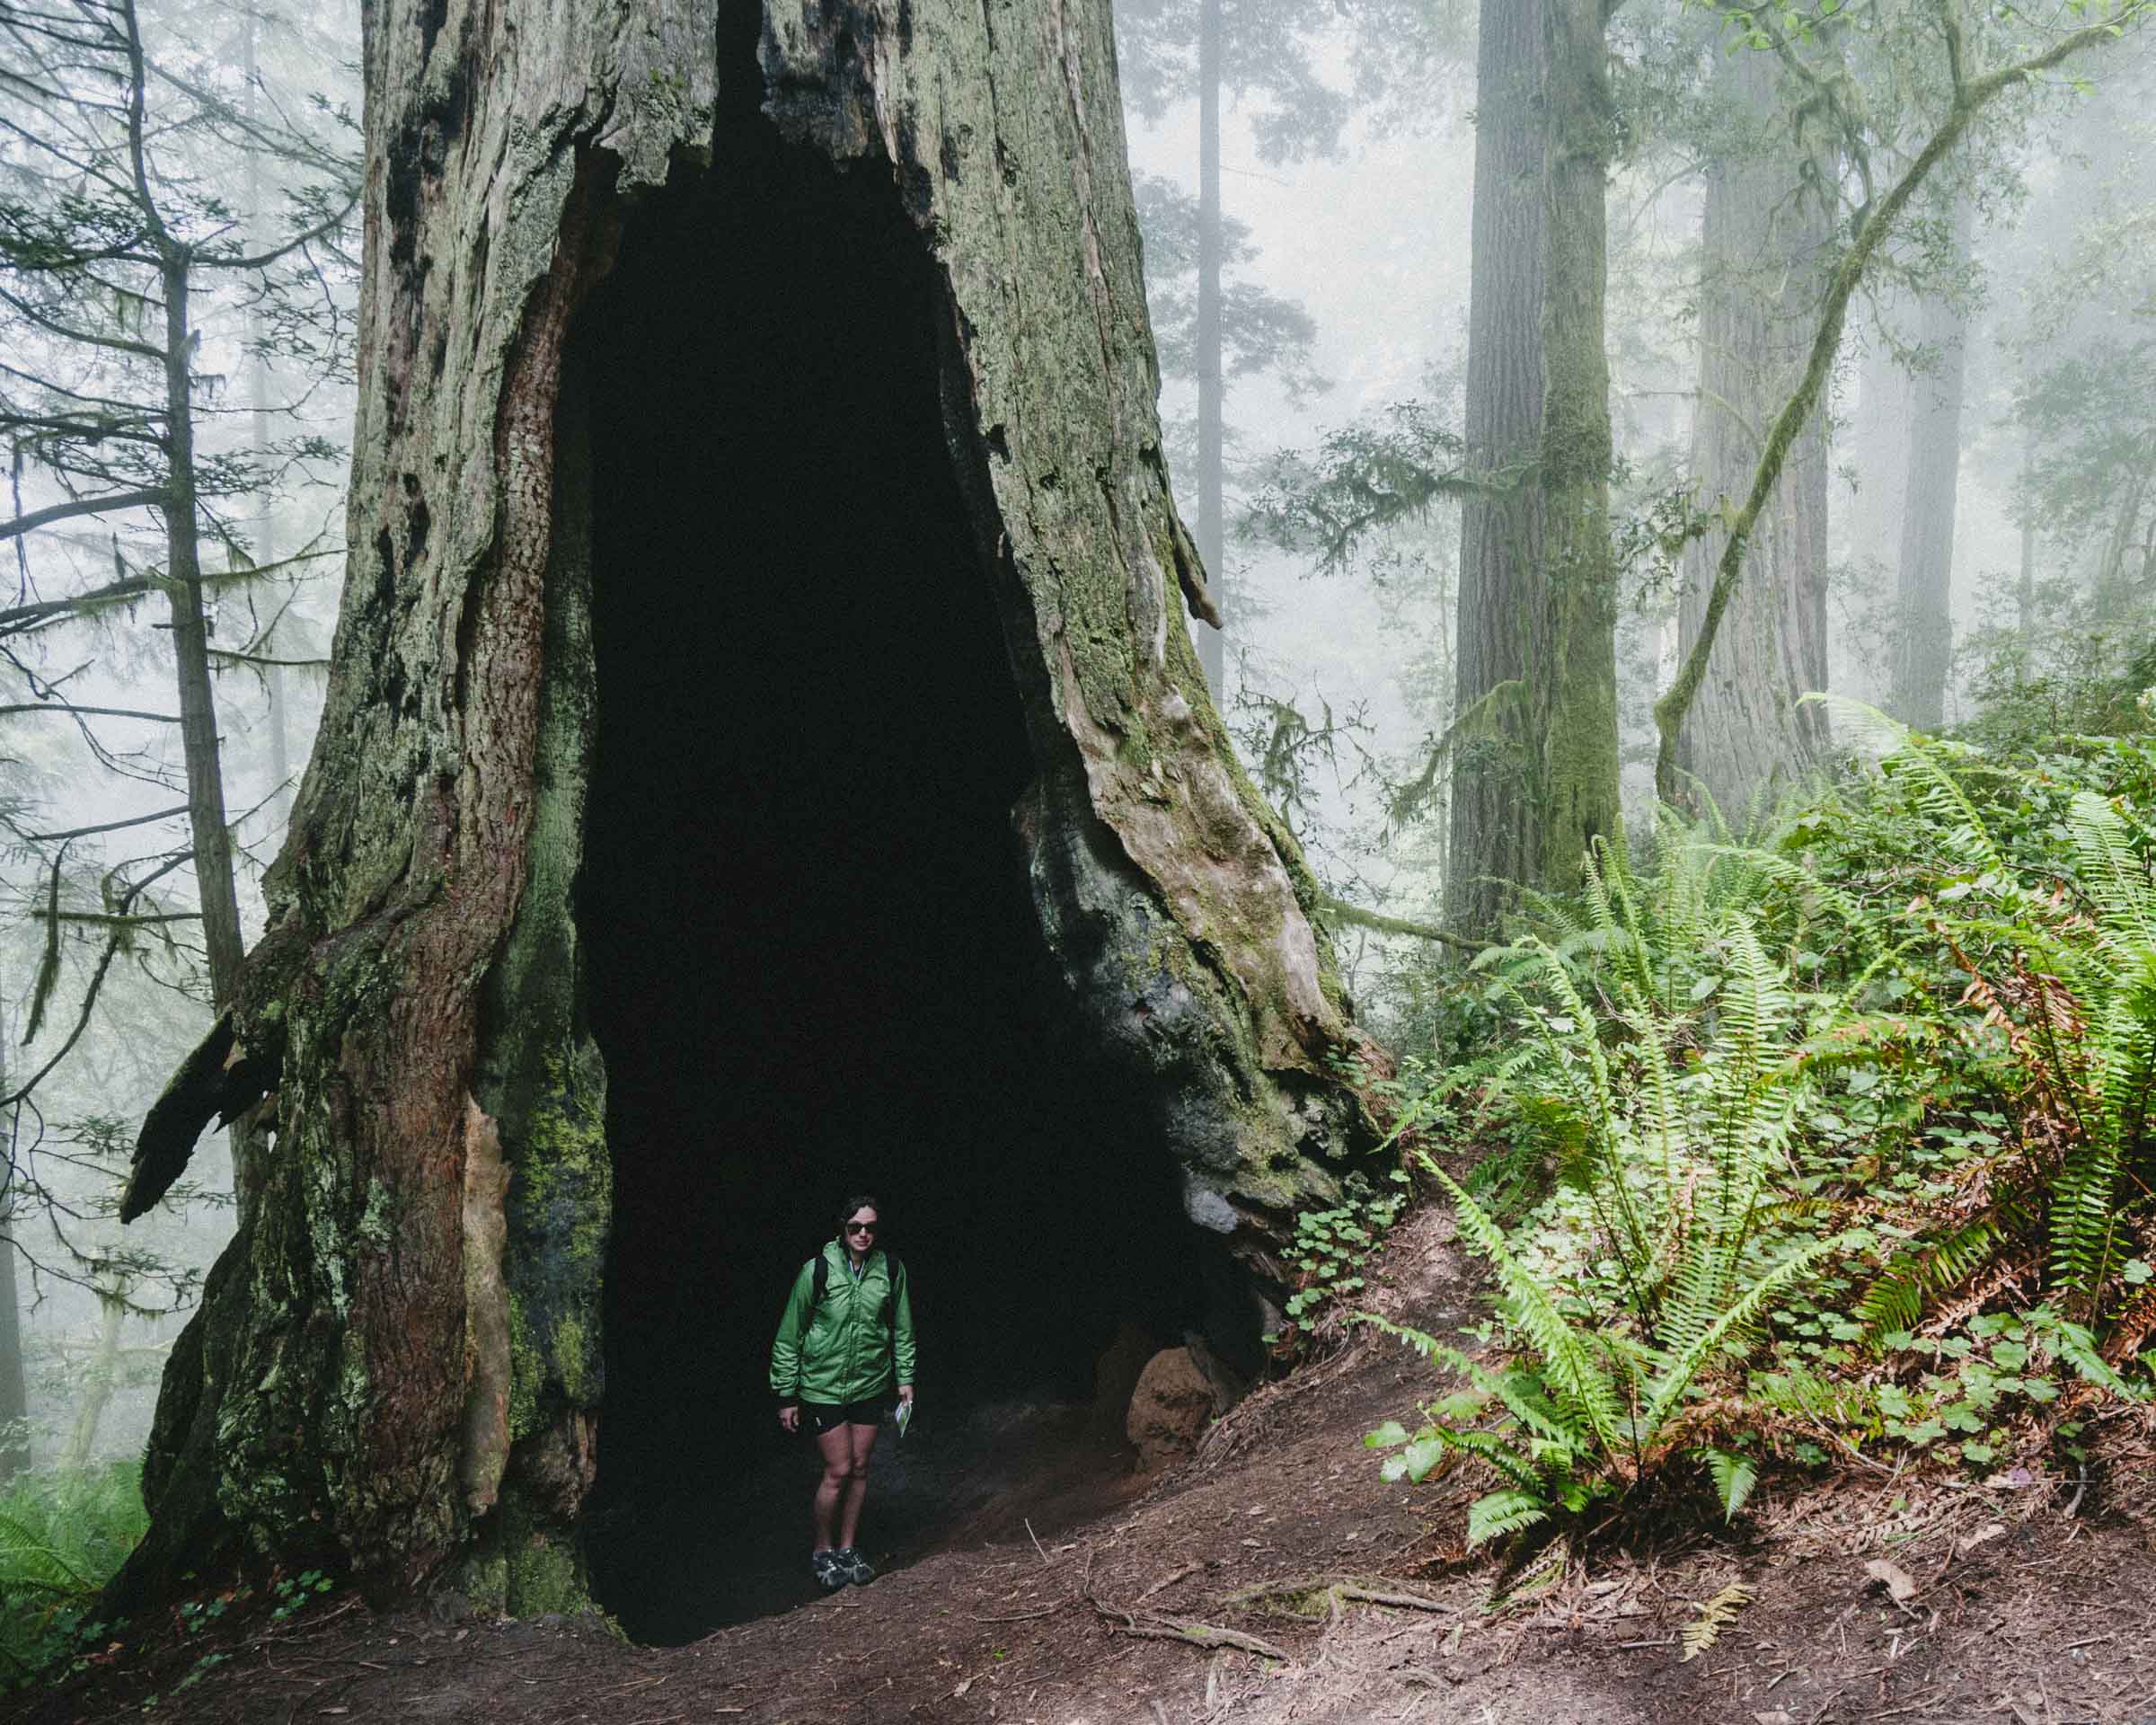 Inside a giant hollow tree